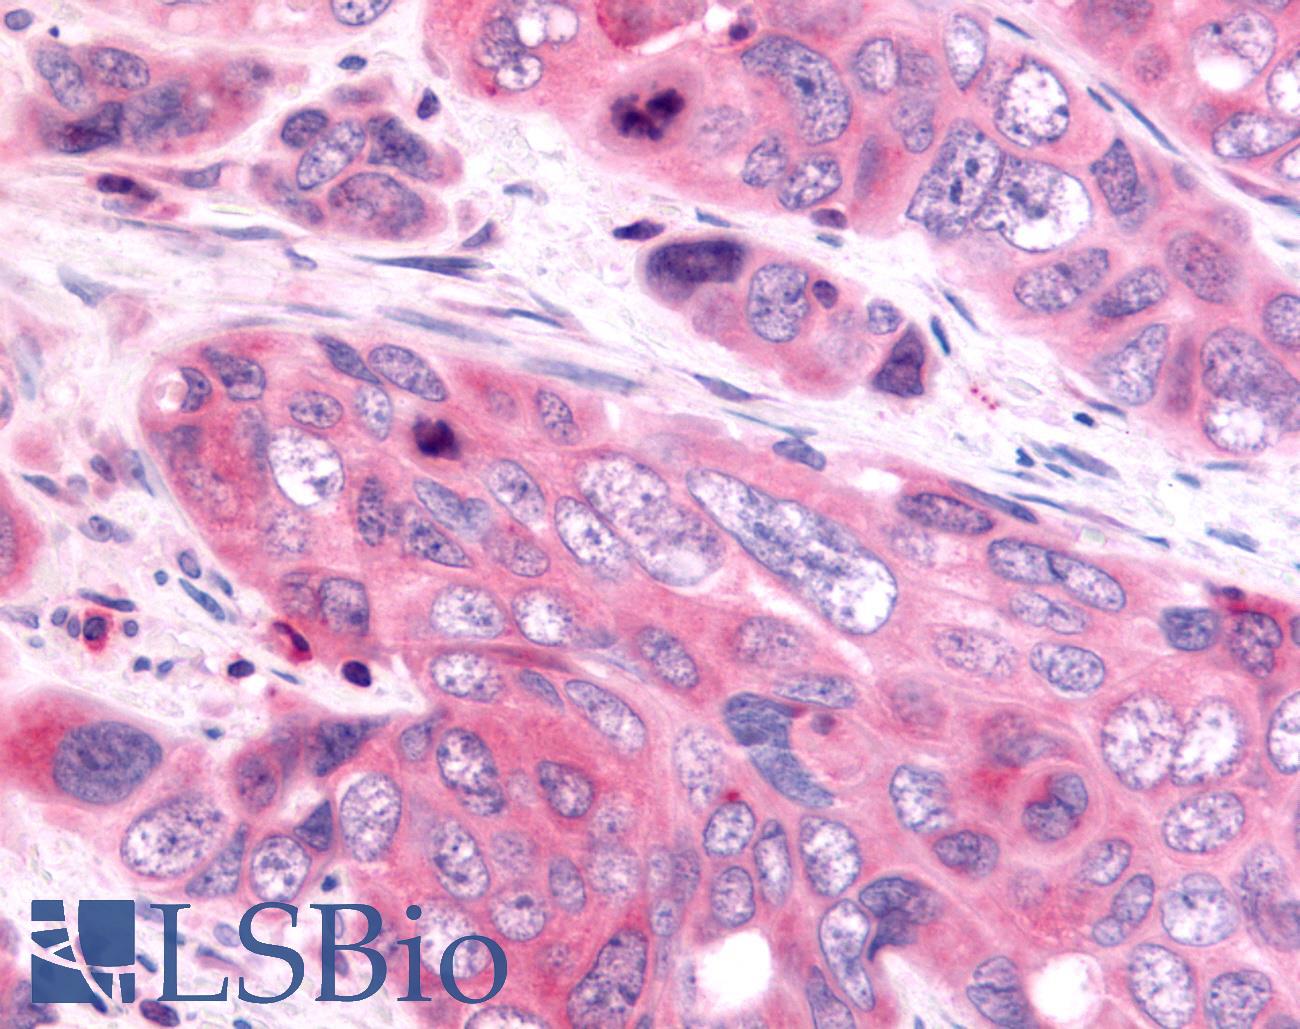 HUNK / B19 Antibody - Colon, Carcinoma